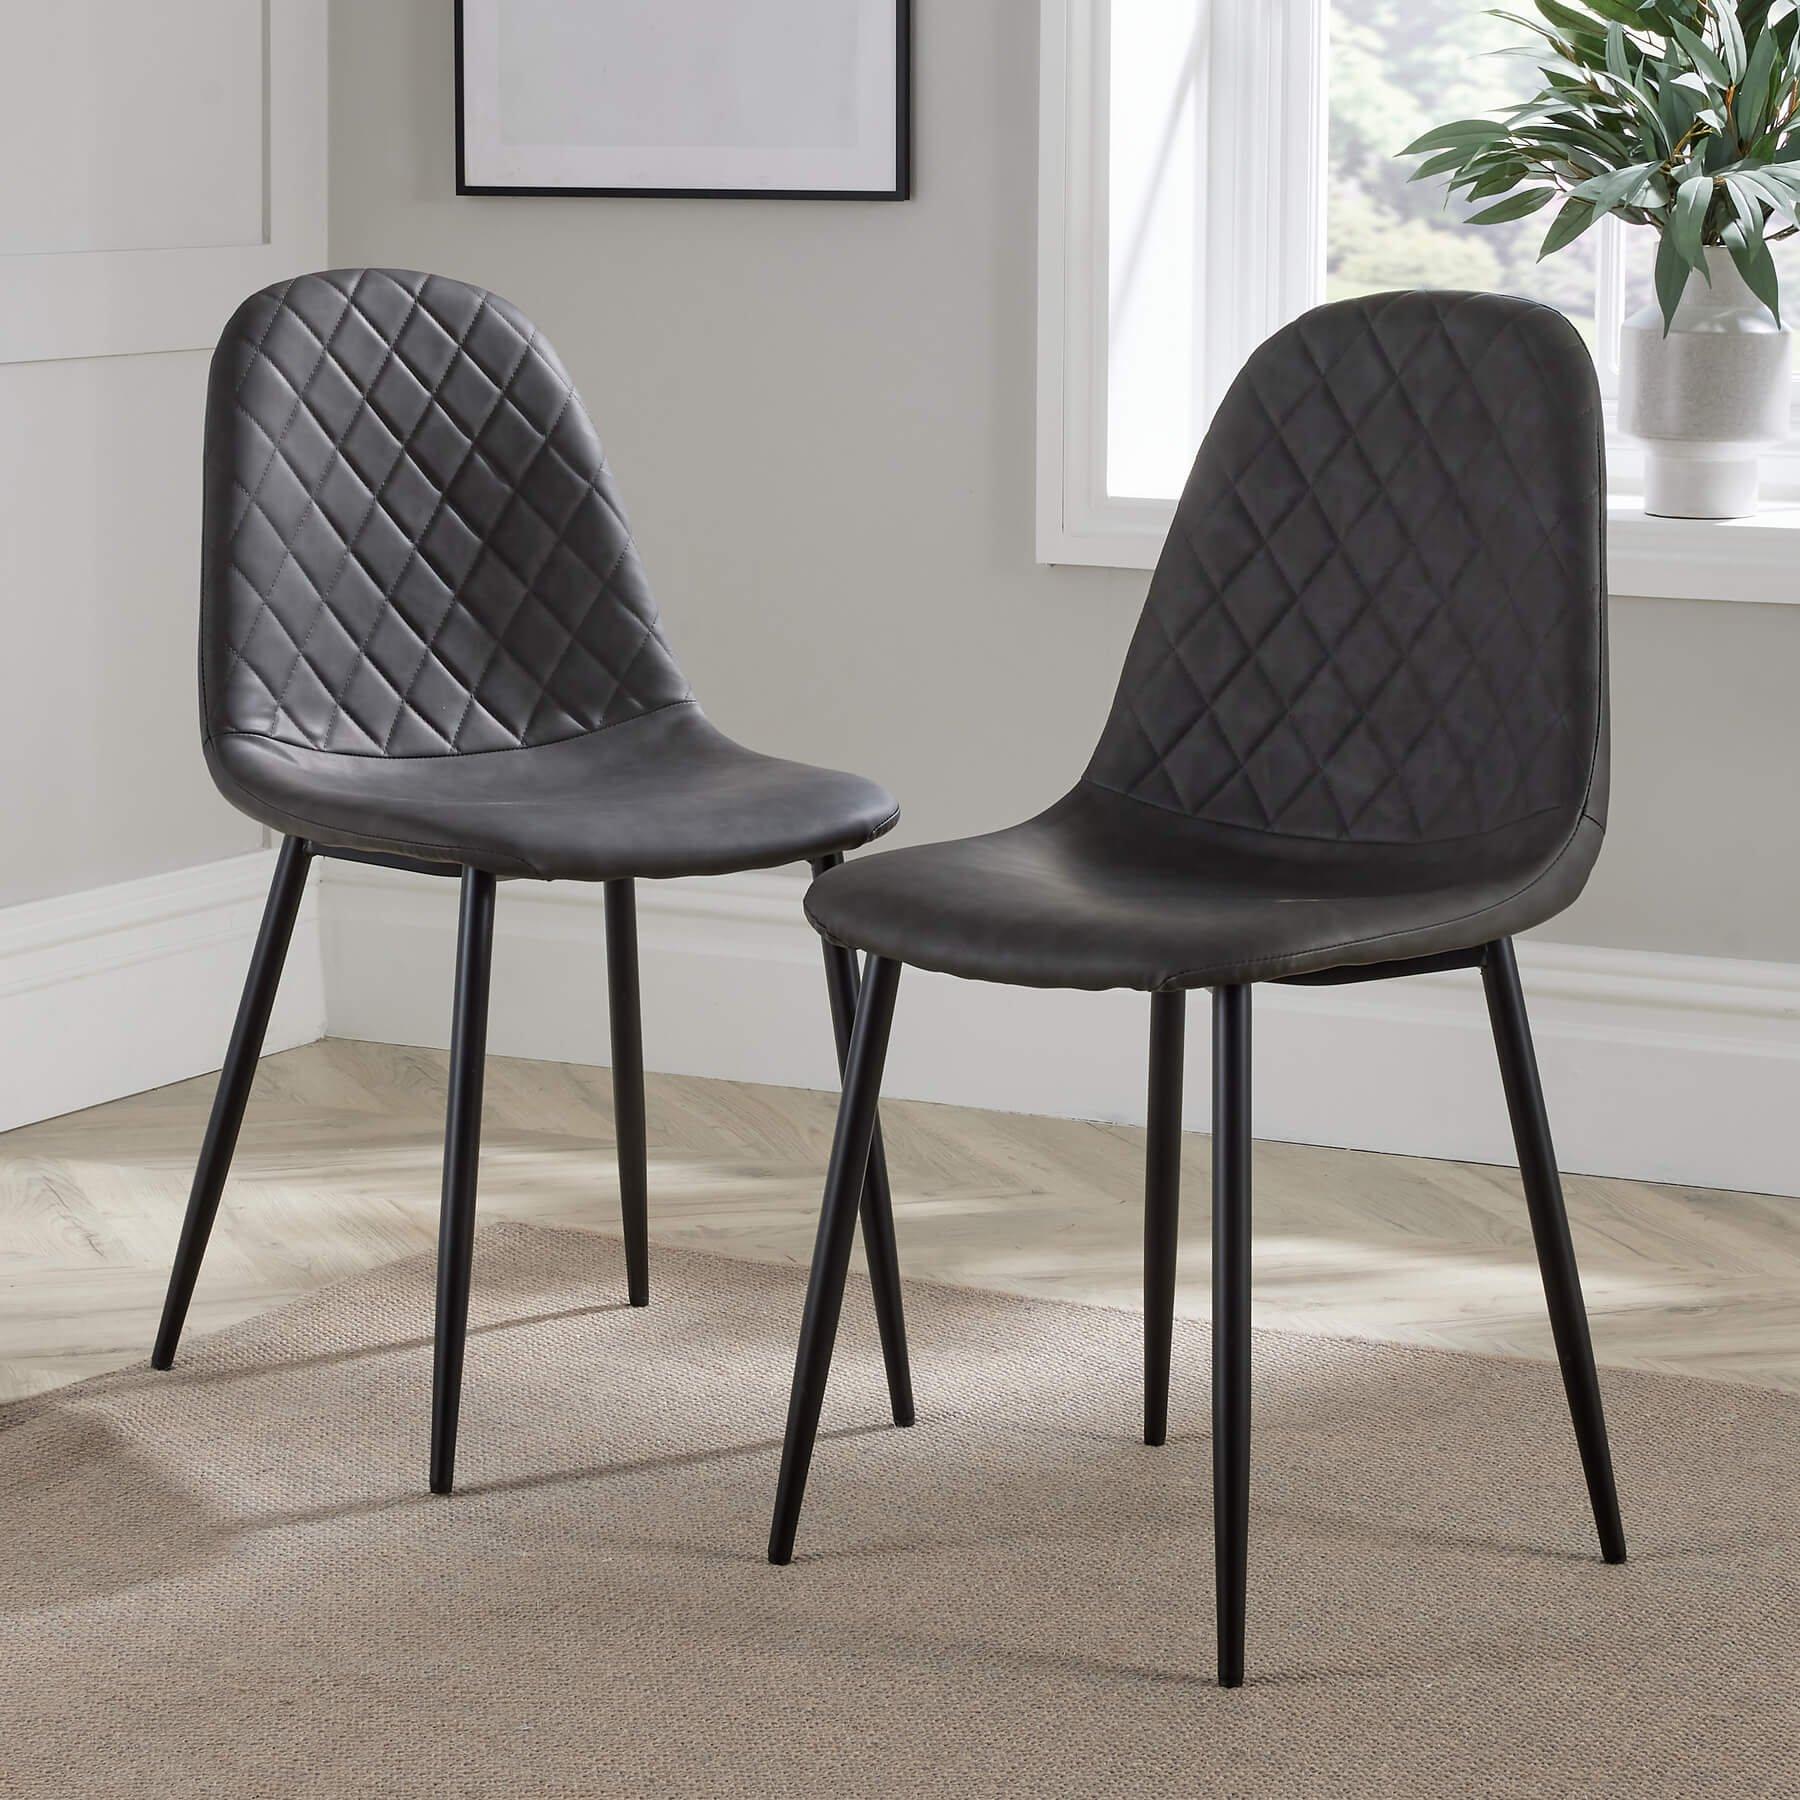 Pair of Diamond Stitch Padded Dining Chairs